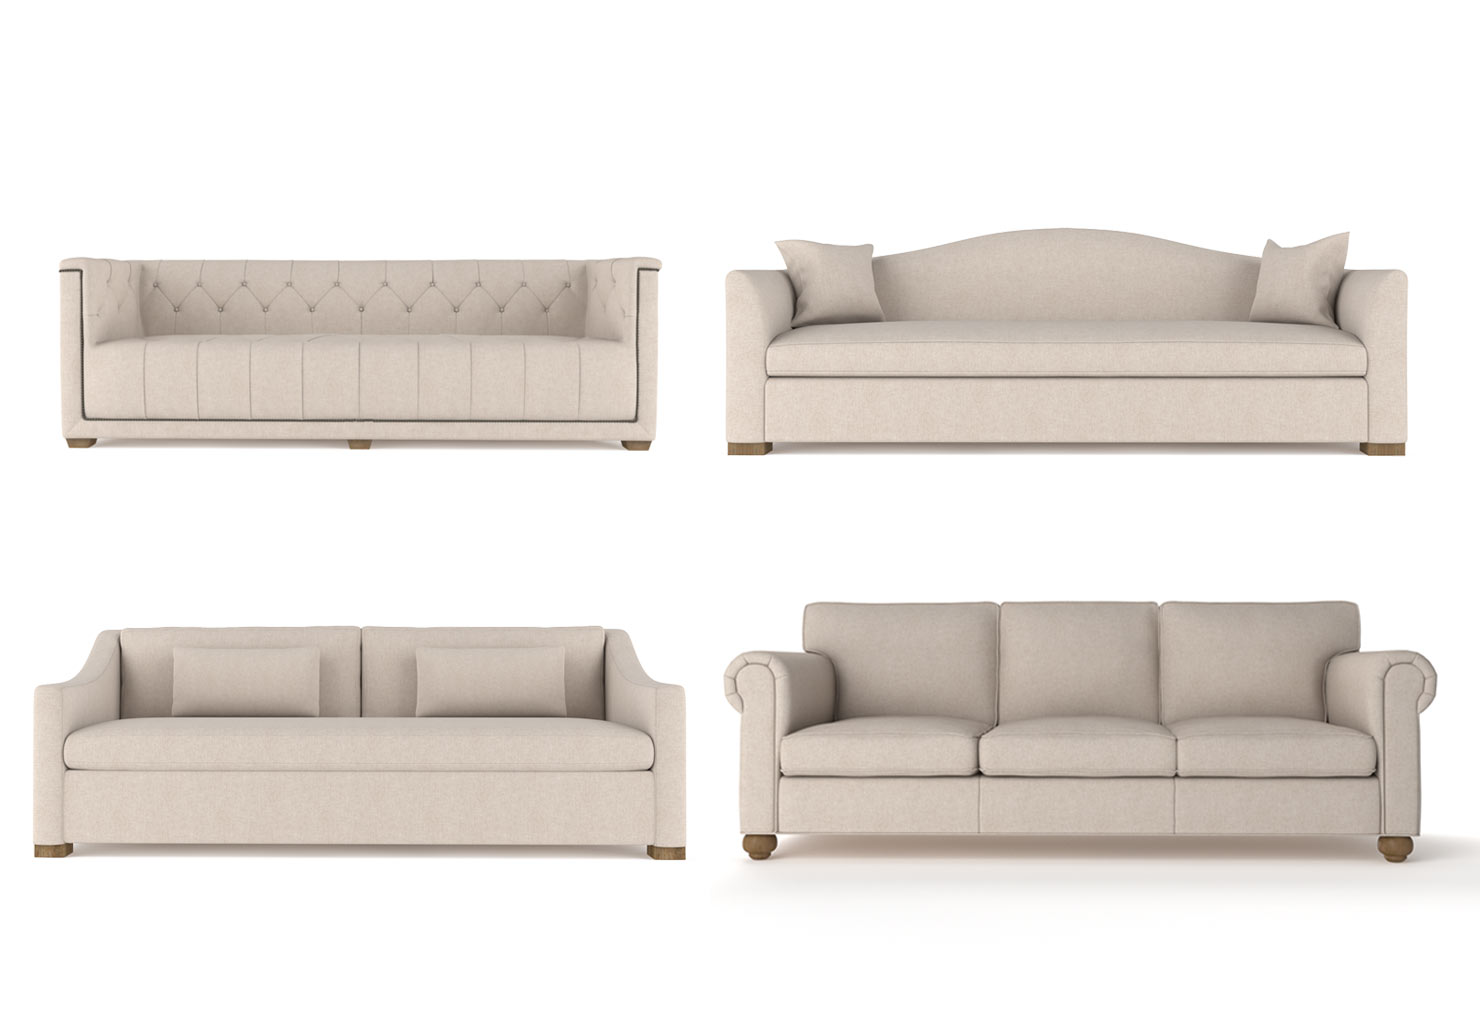 sofa product rendering